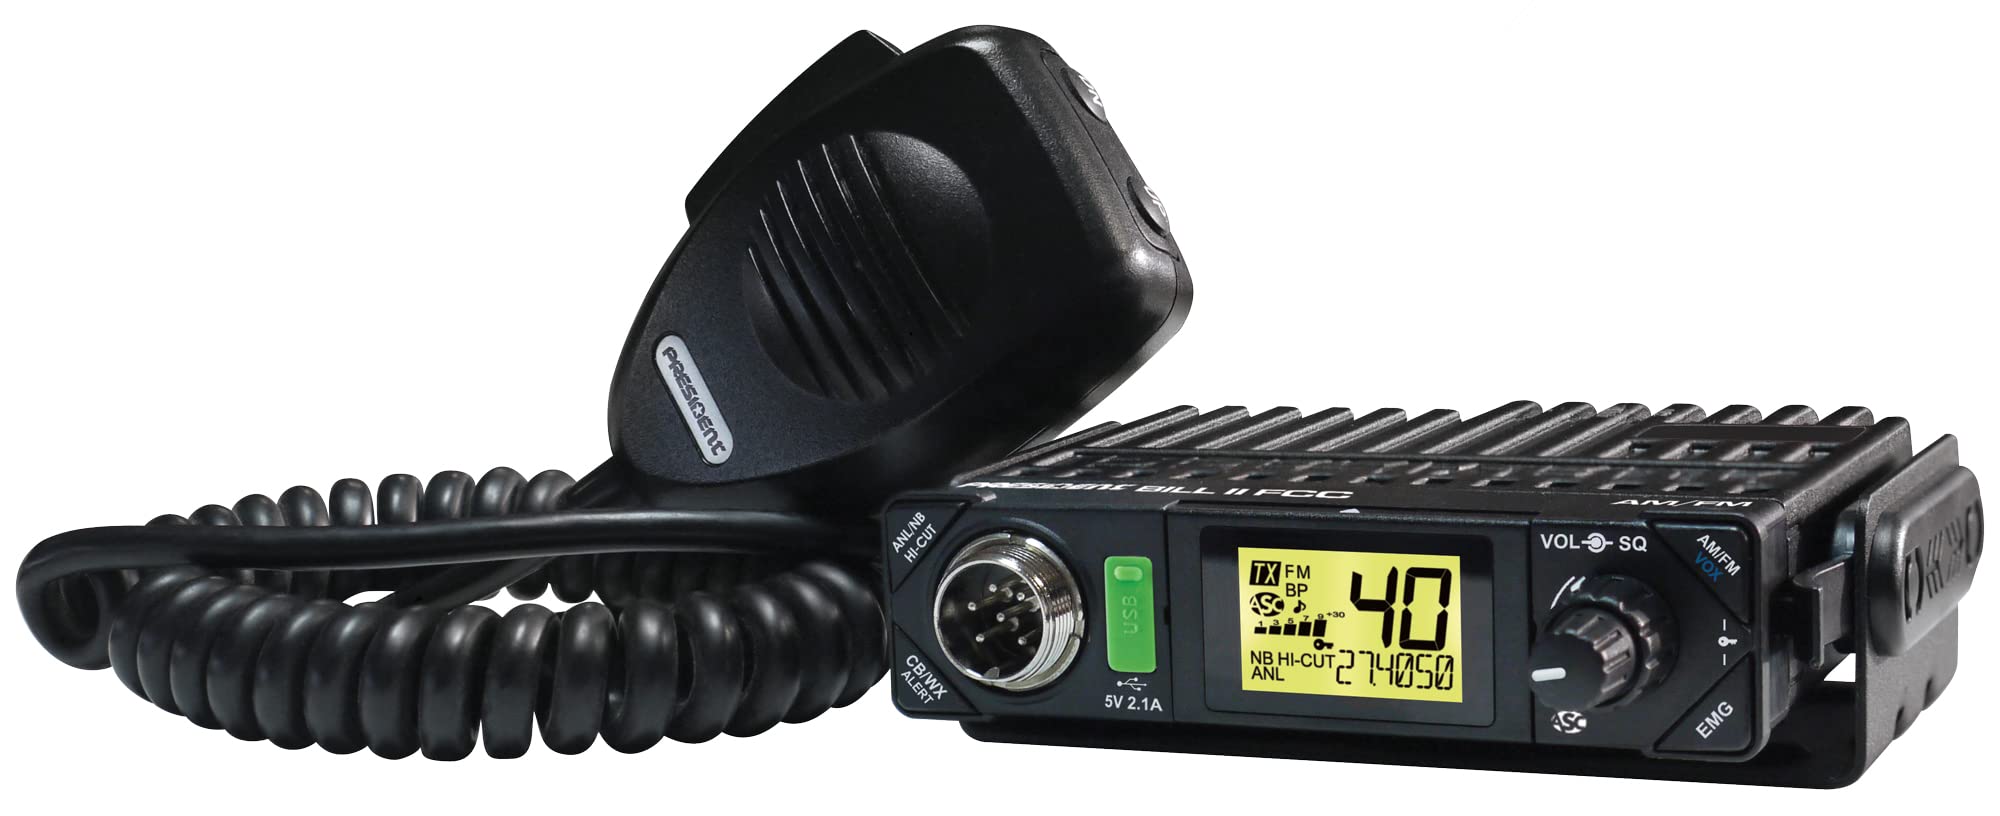 President Electronics Bill II FCC Ultra-Compact AM/FM CB Radio, Black, TXUS101